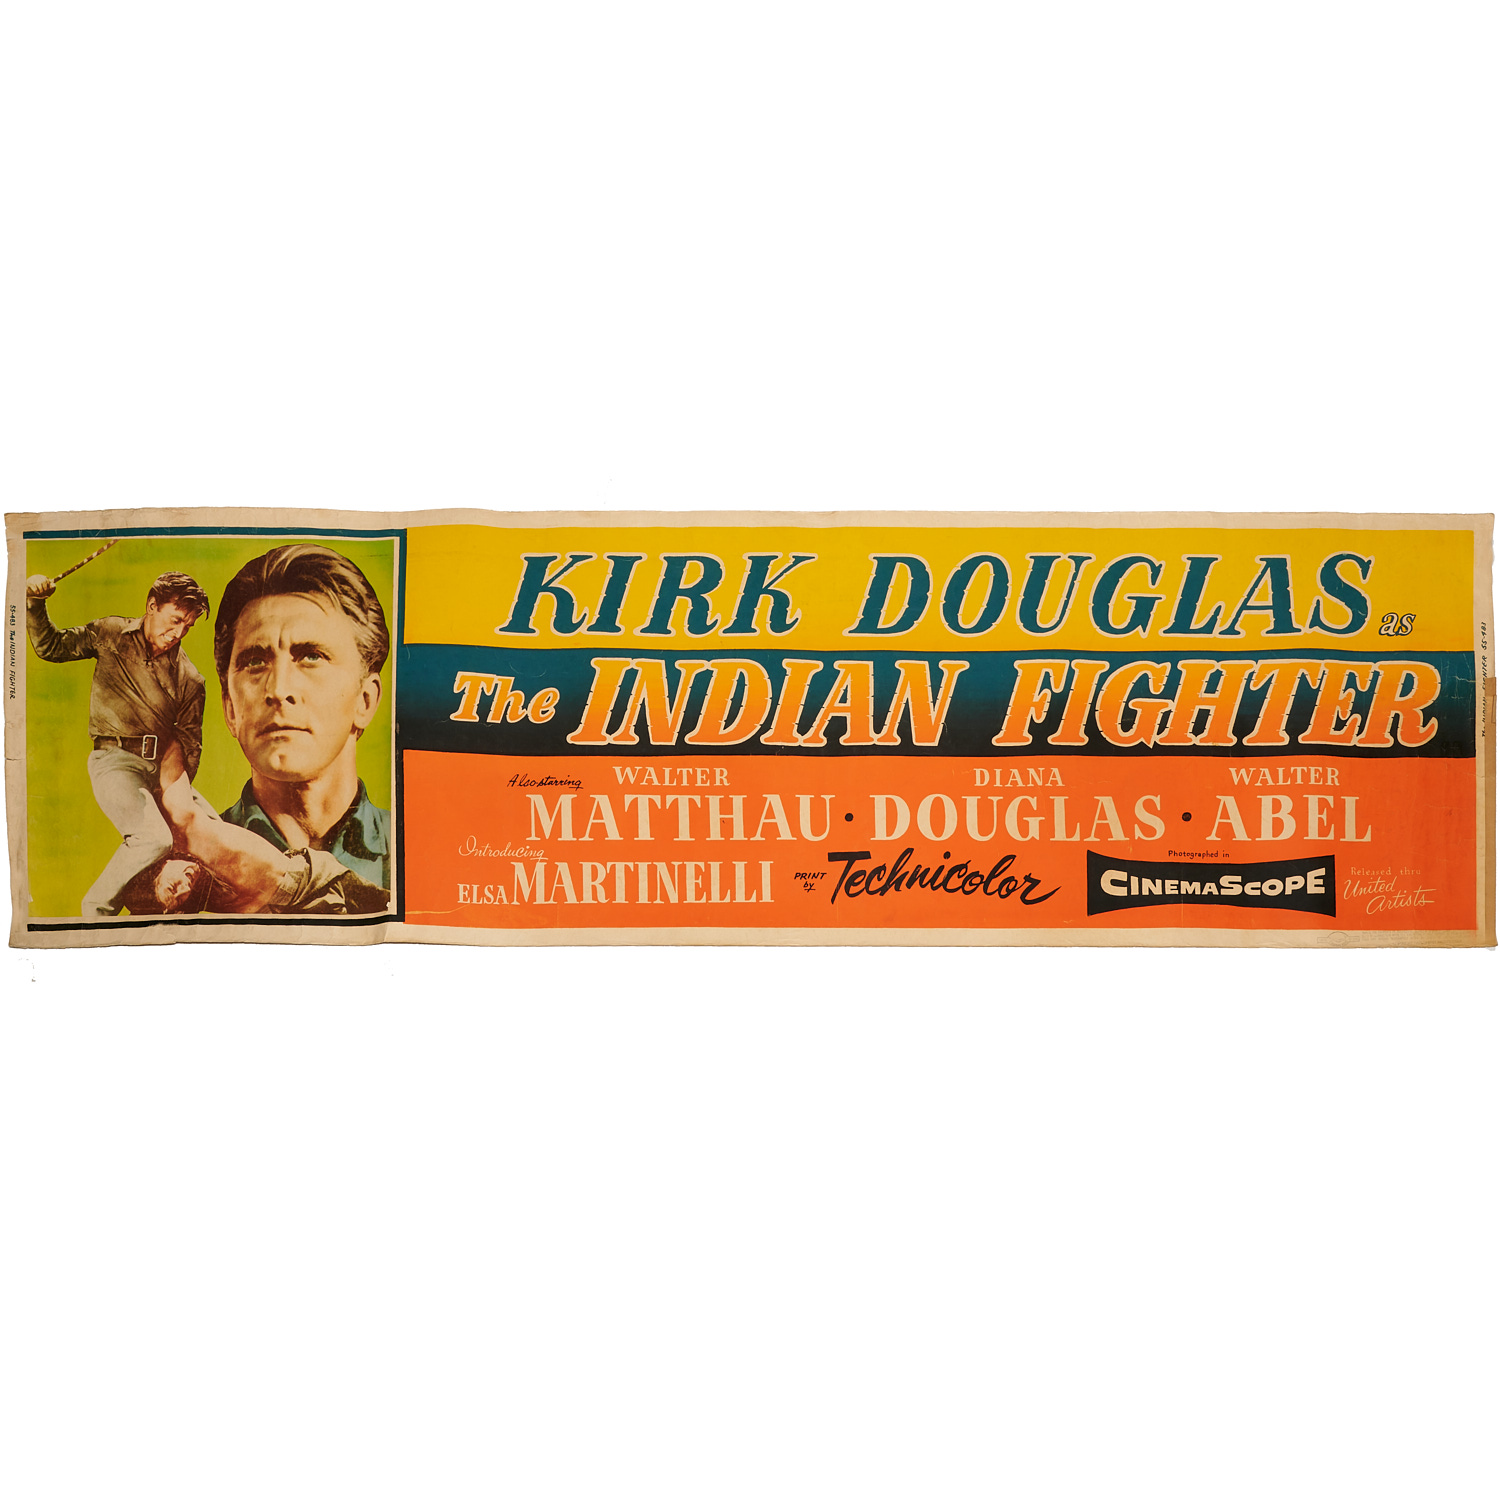 KIRK DOUGLAS INDIAN FIGHTER BANNER 362112